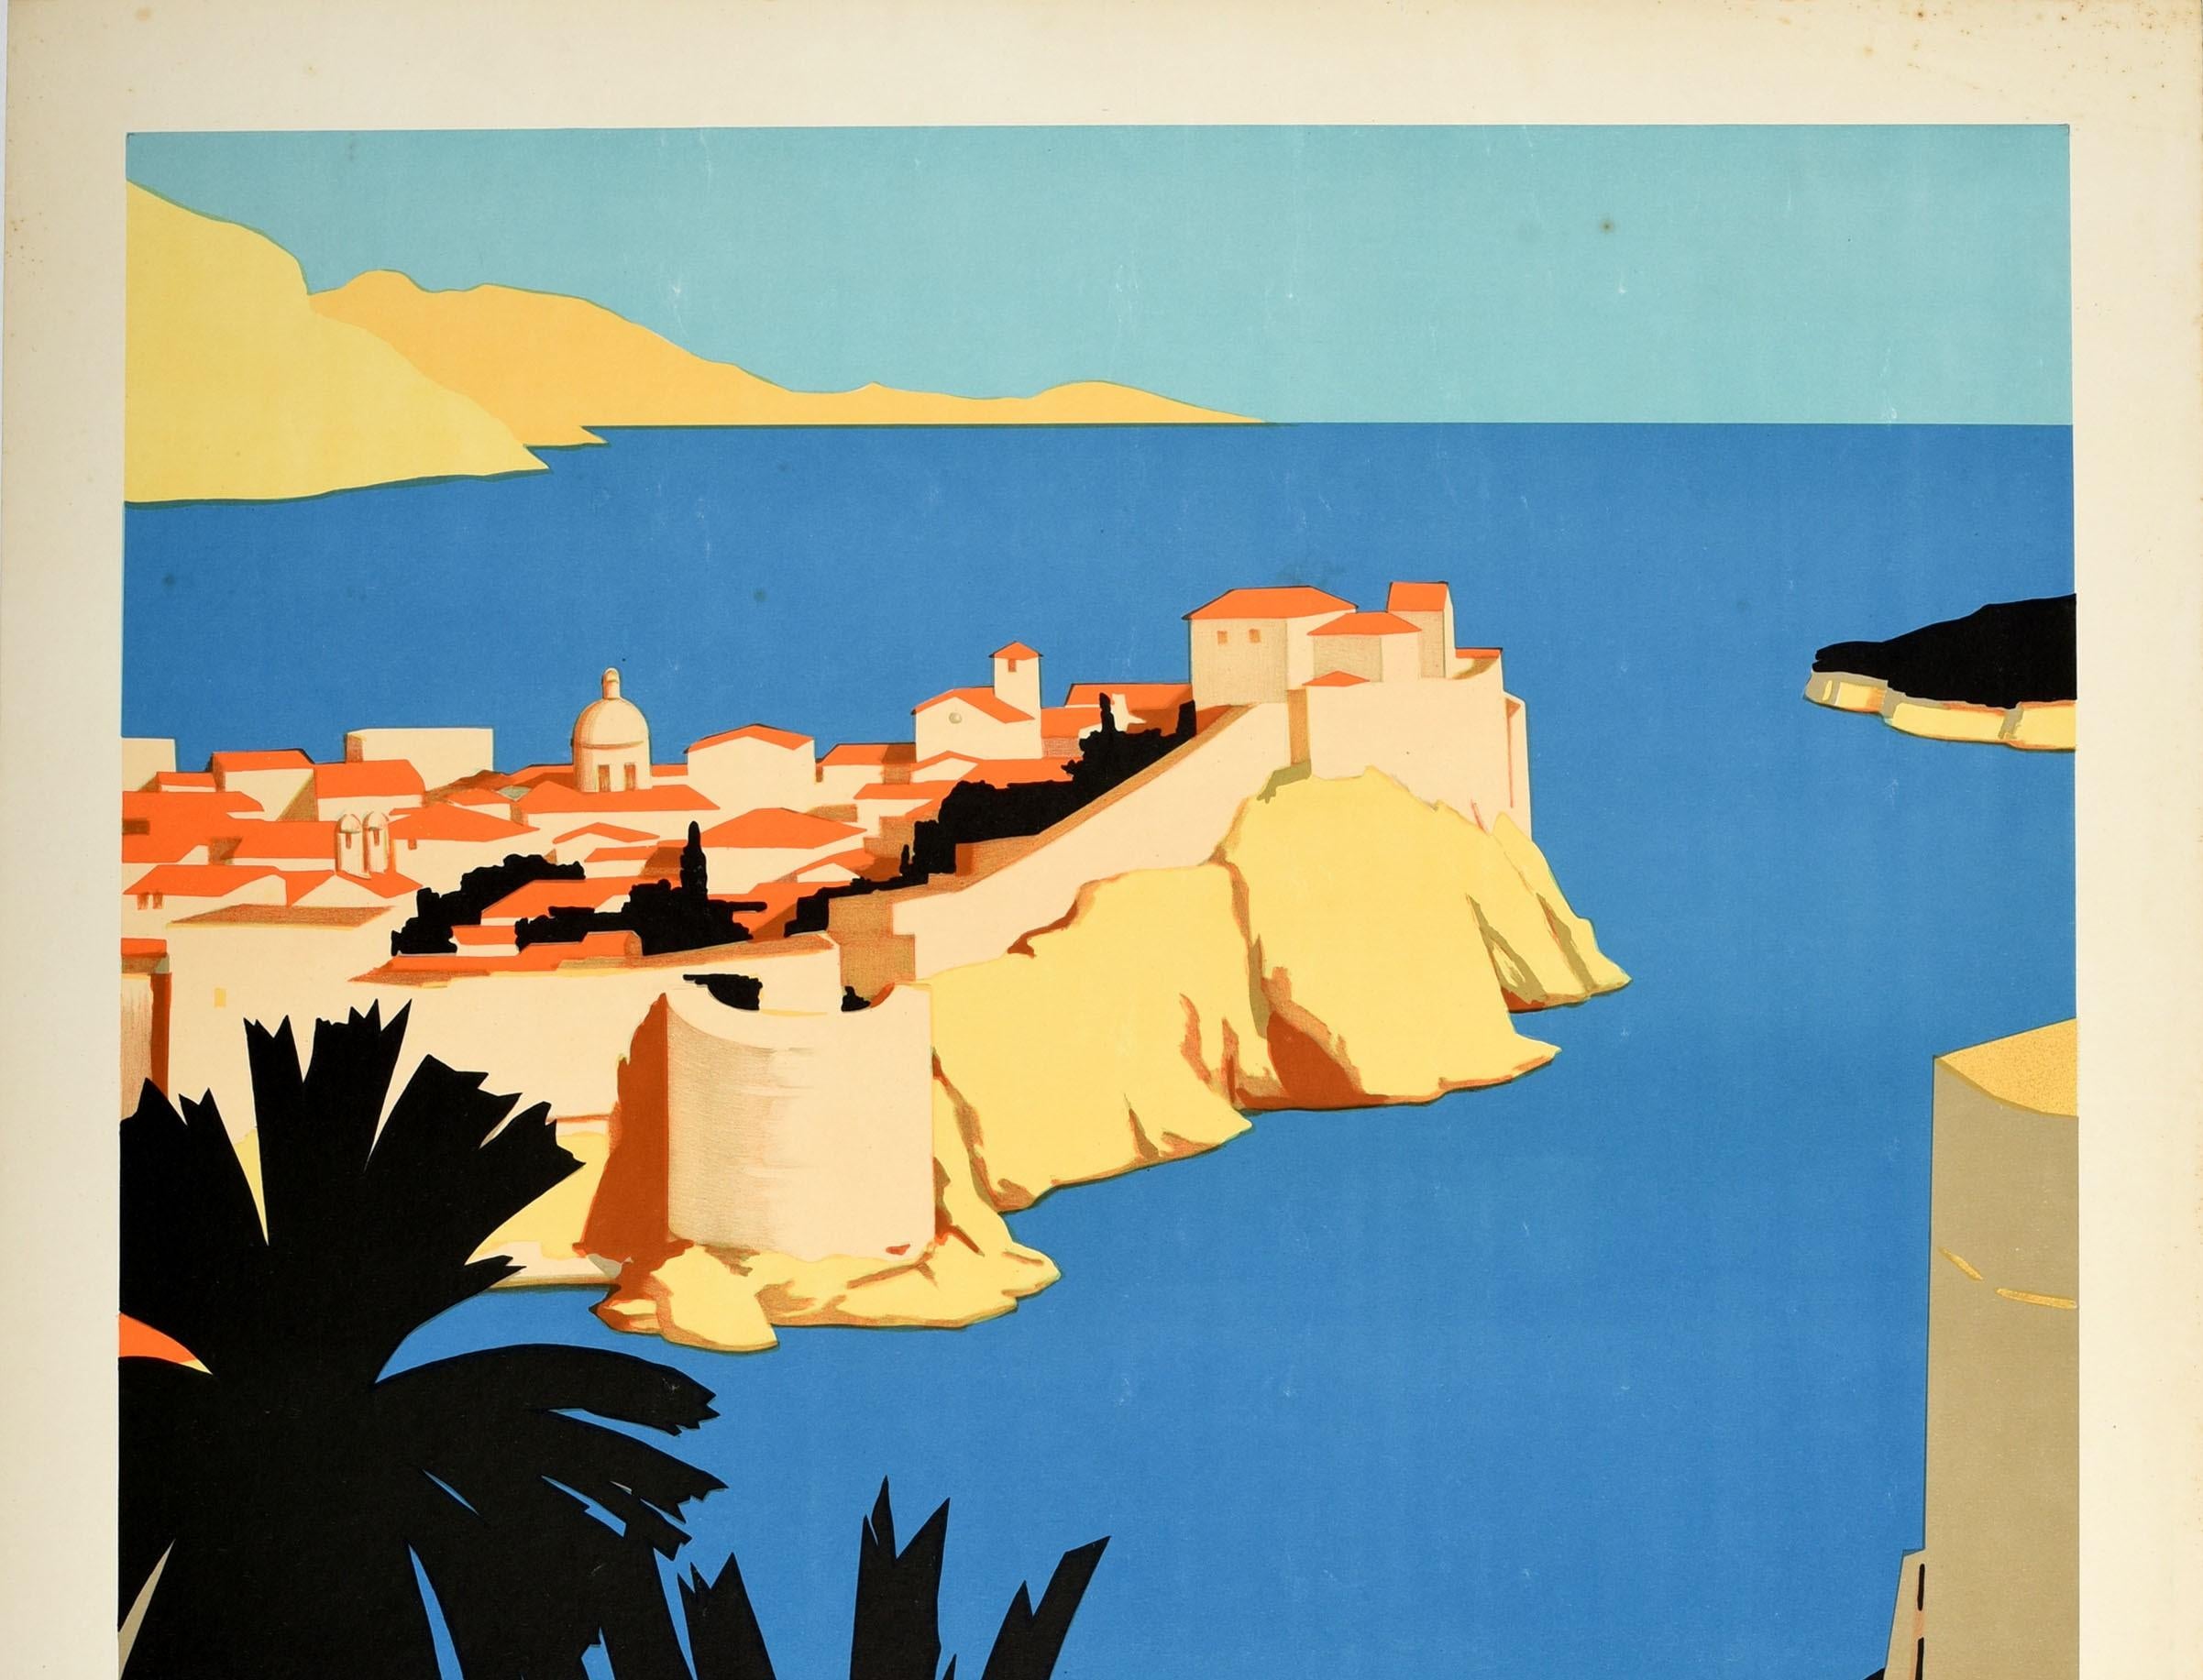 Original Vintage Travel Poster Dubrovnik Jugoslavia Gem Of The Adriatic Coast - Print by Hans Wagula